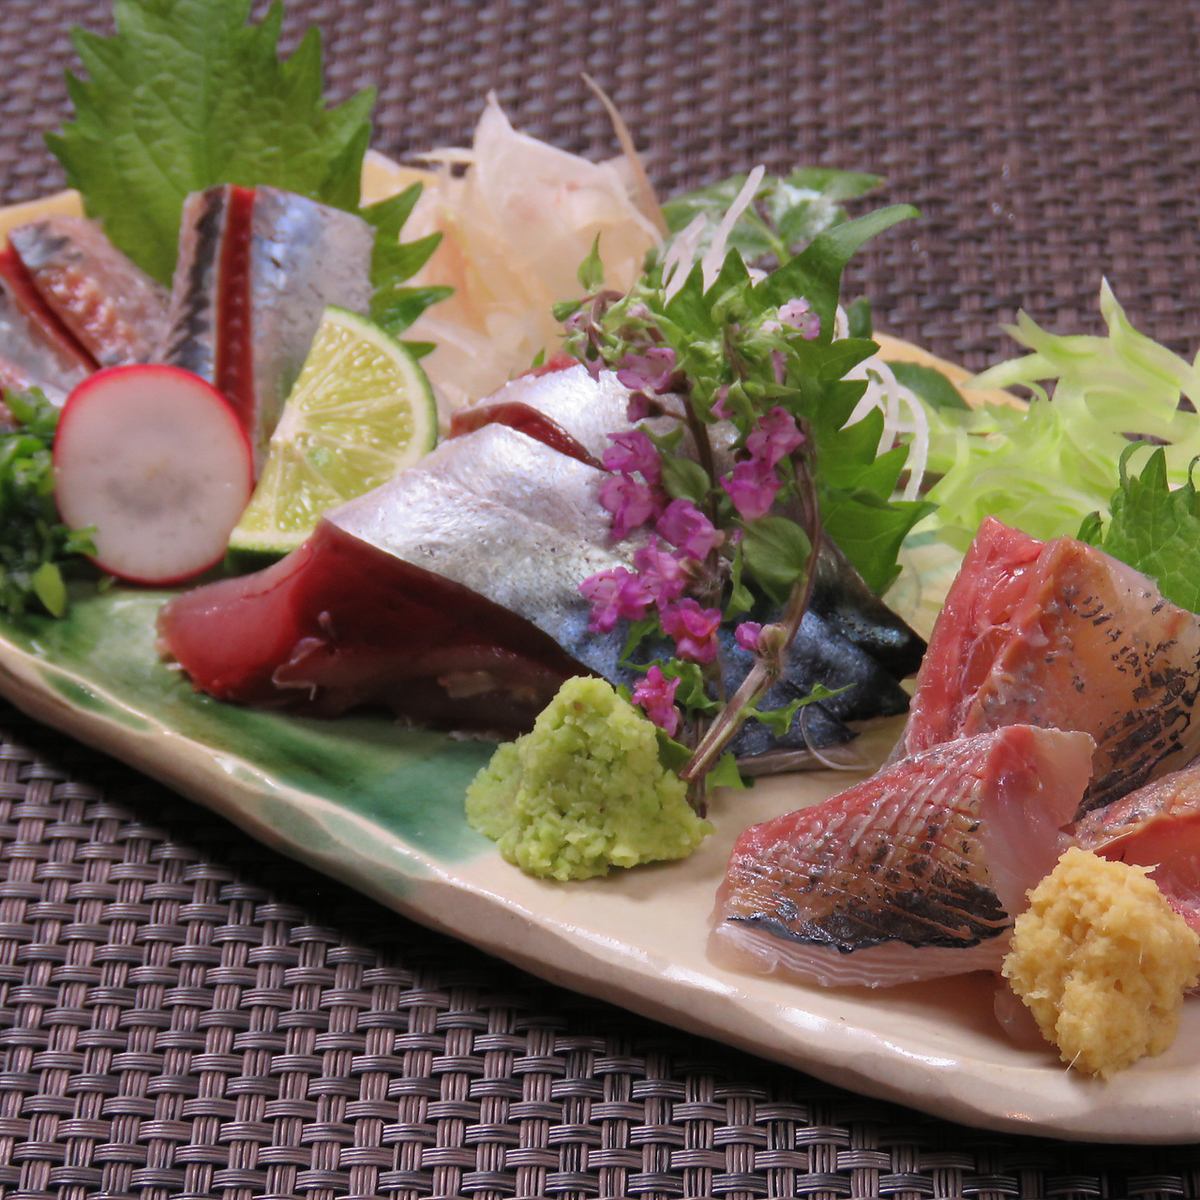 We provide fresh fish purchased directly from Toyosu Market.